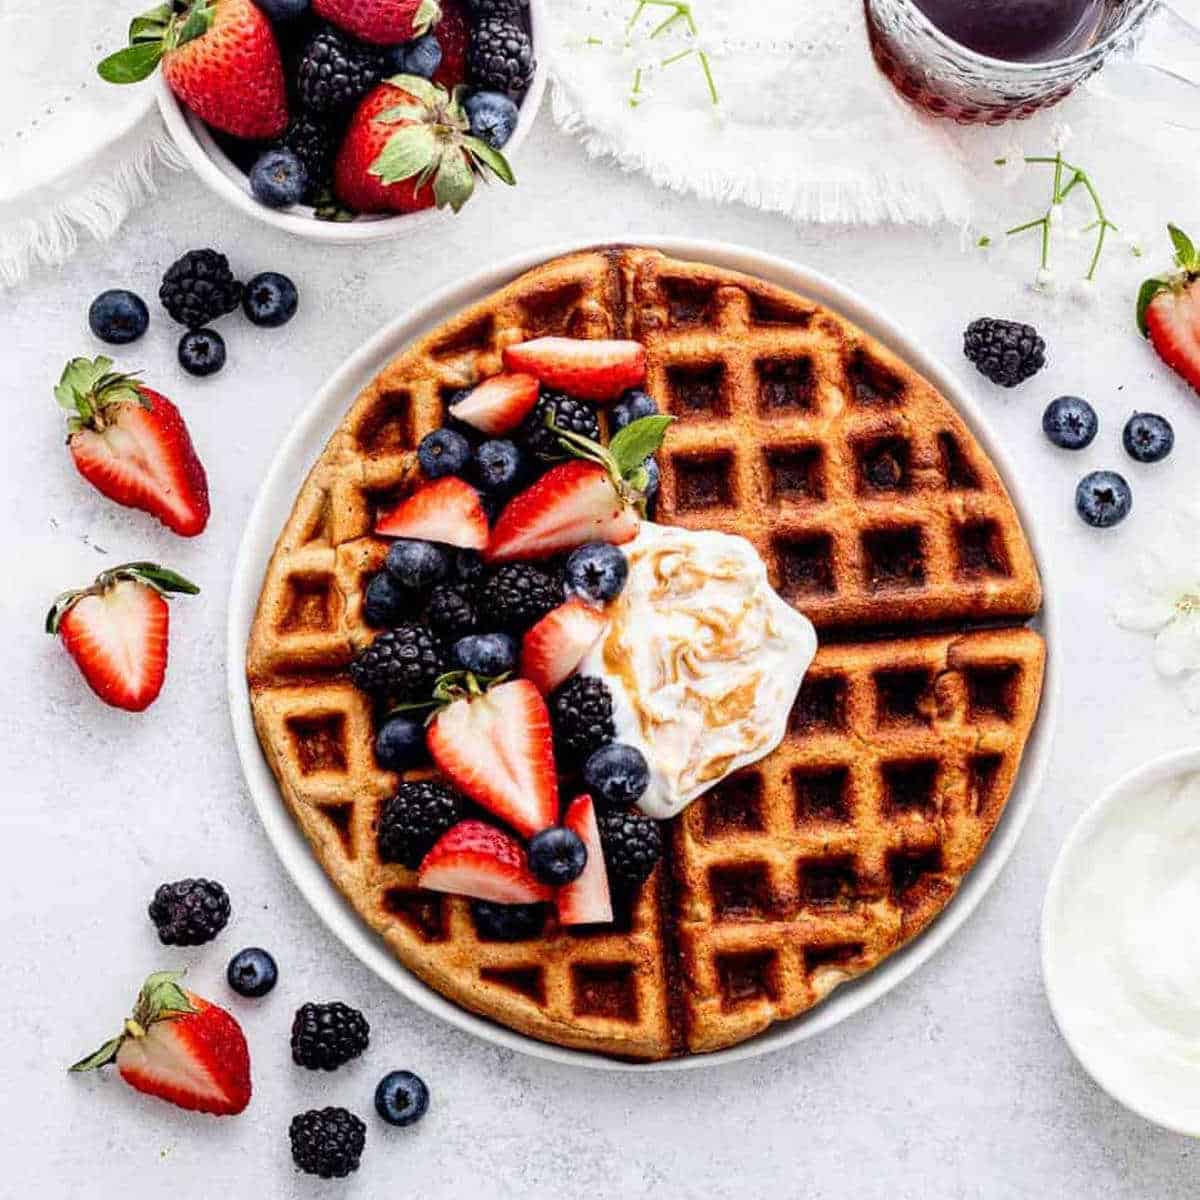 A banana oatmeal waffle on a plate with mixed berries and yogurt.